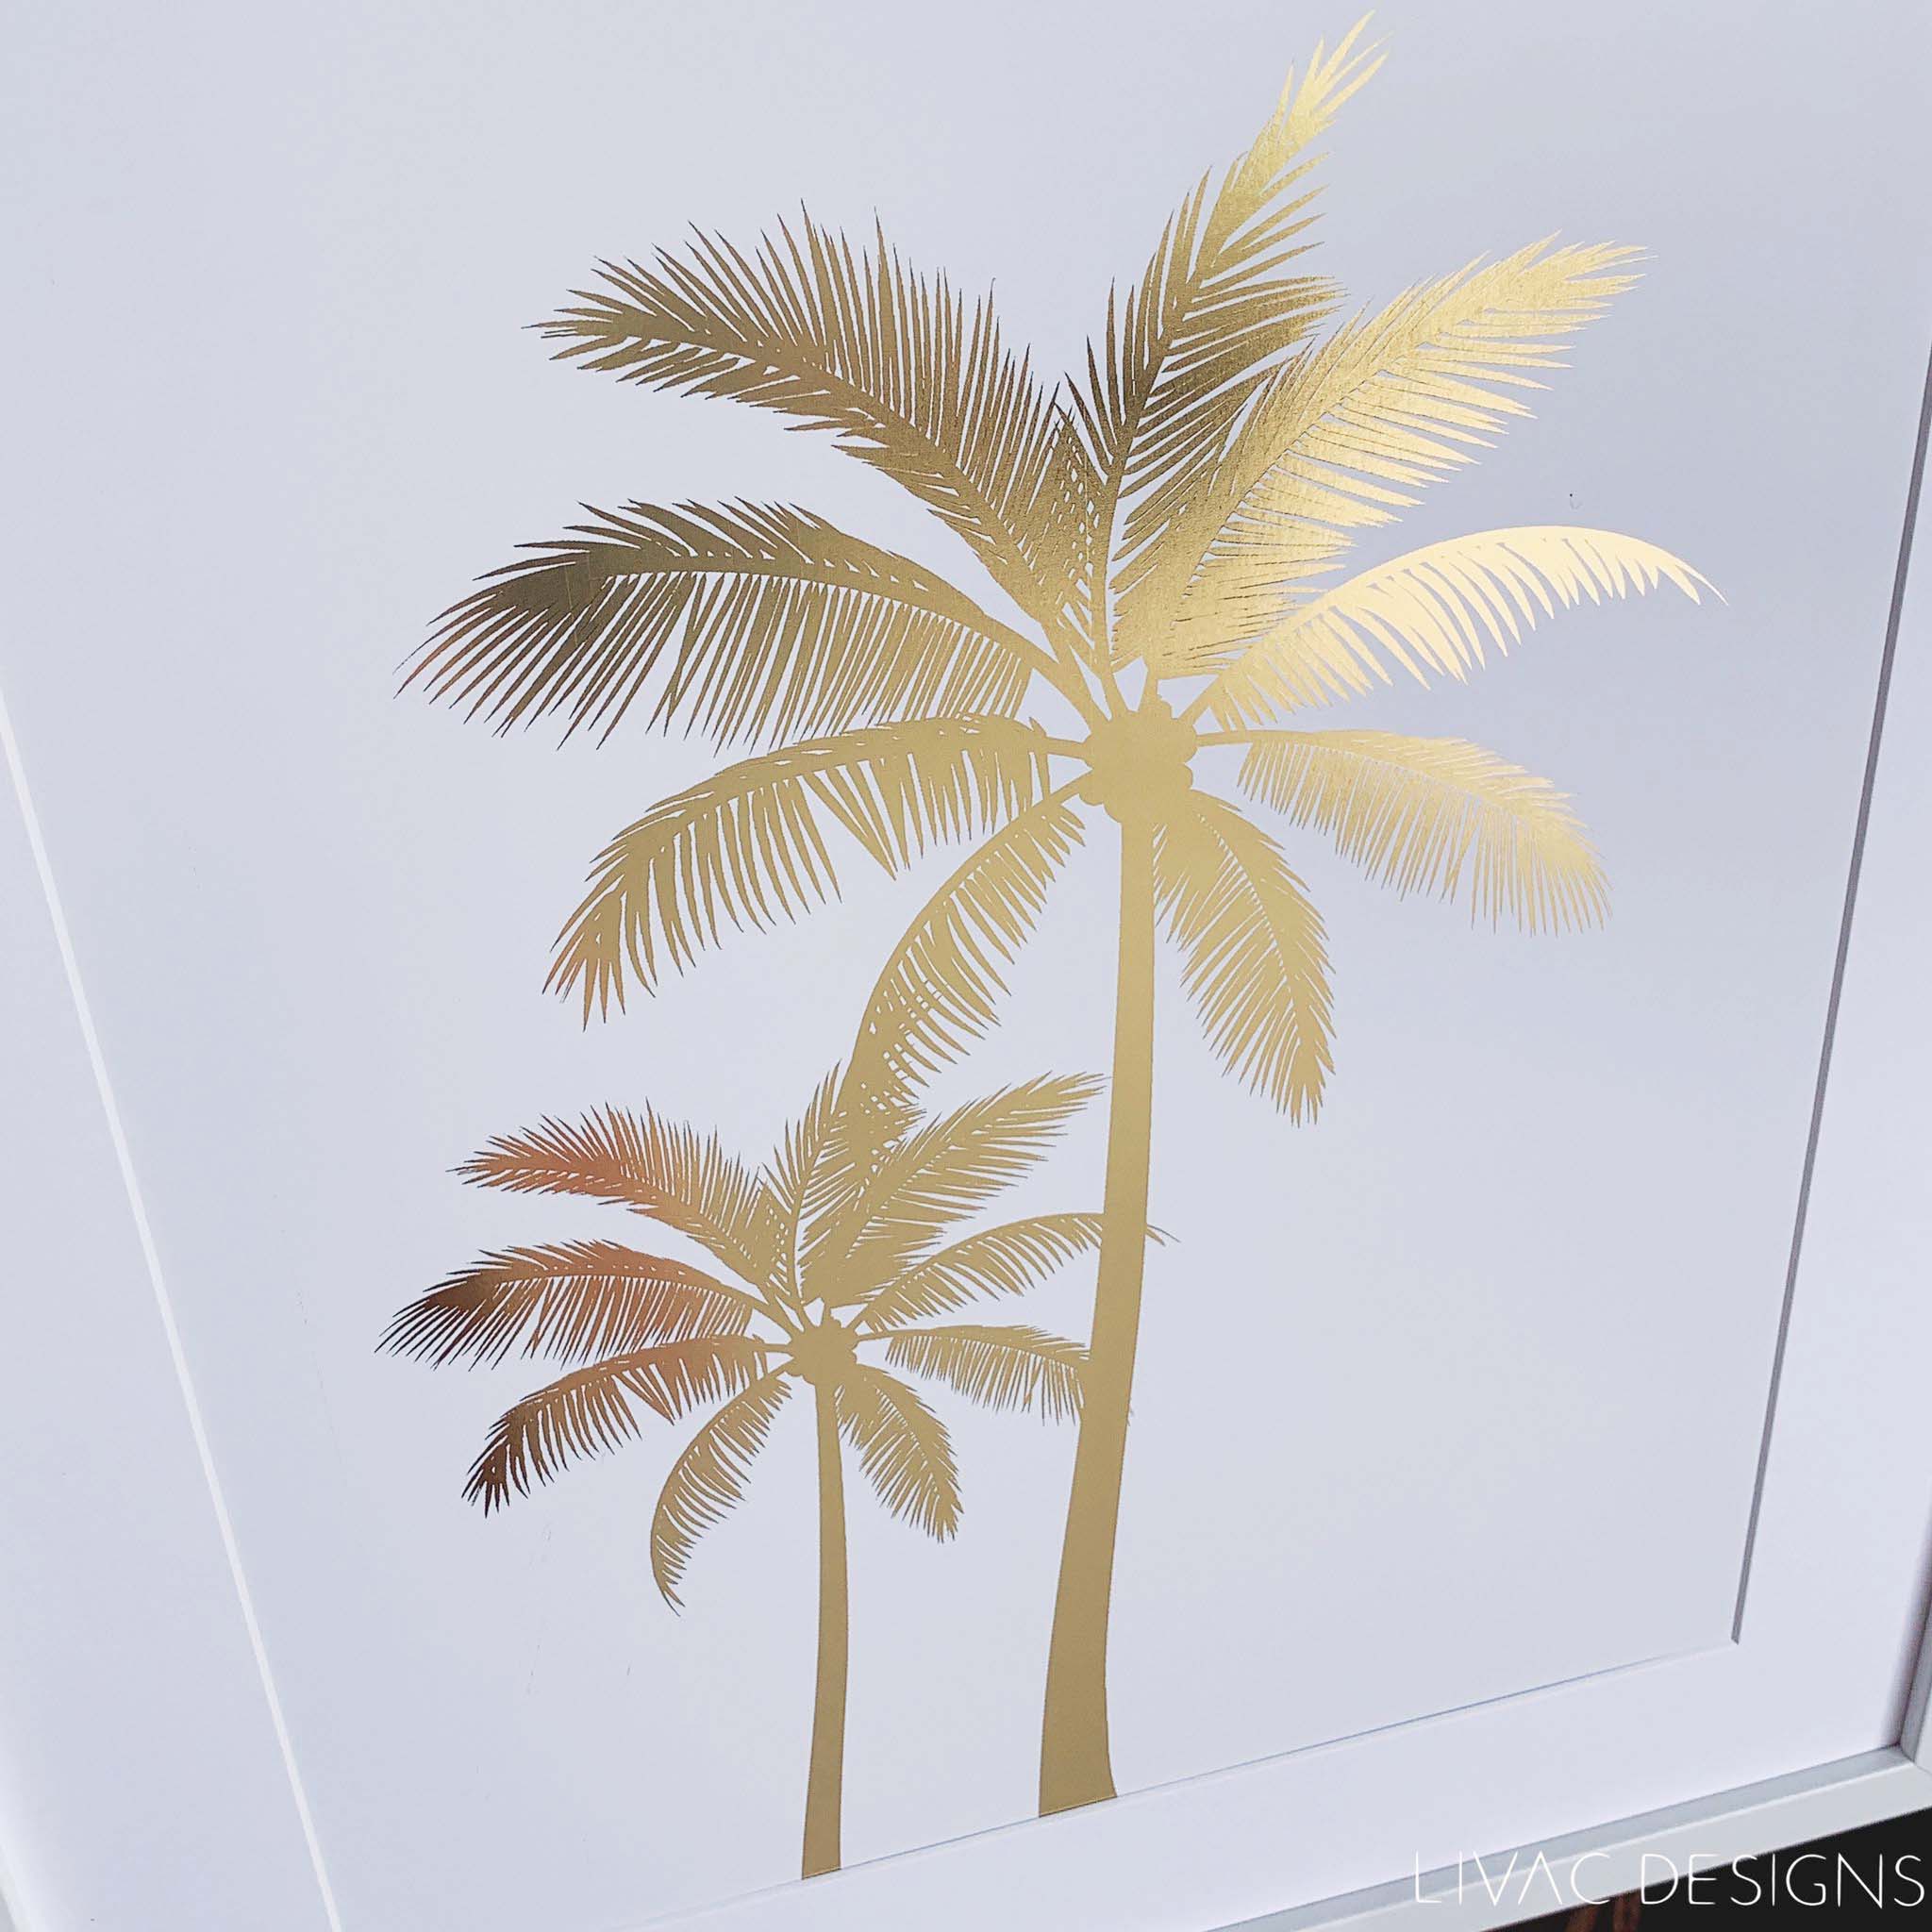 Coconut tree - Gold foil print